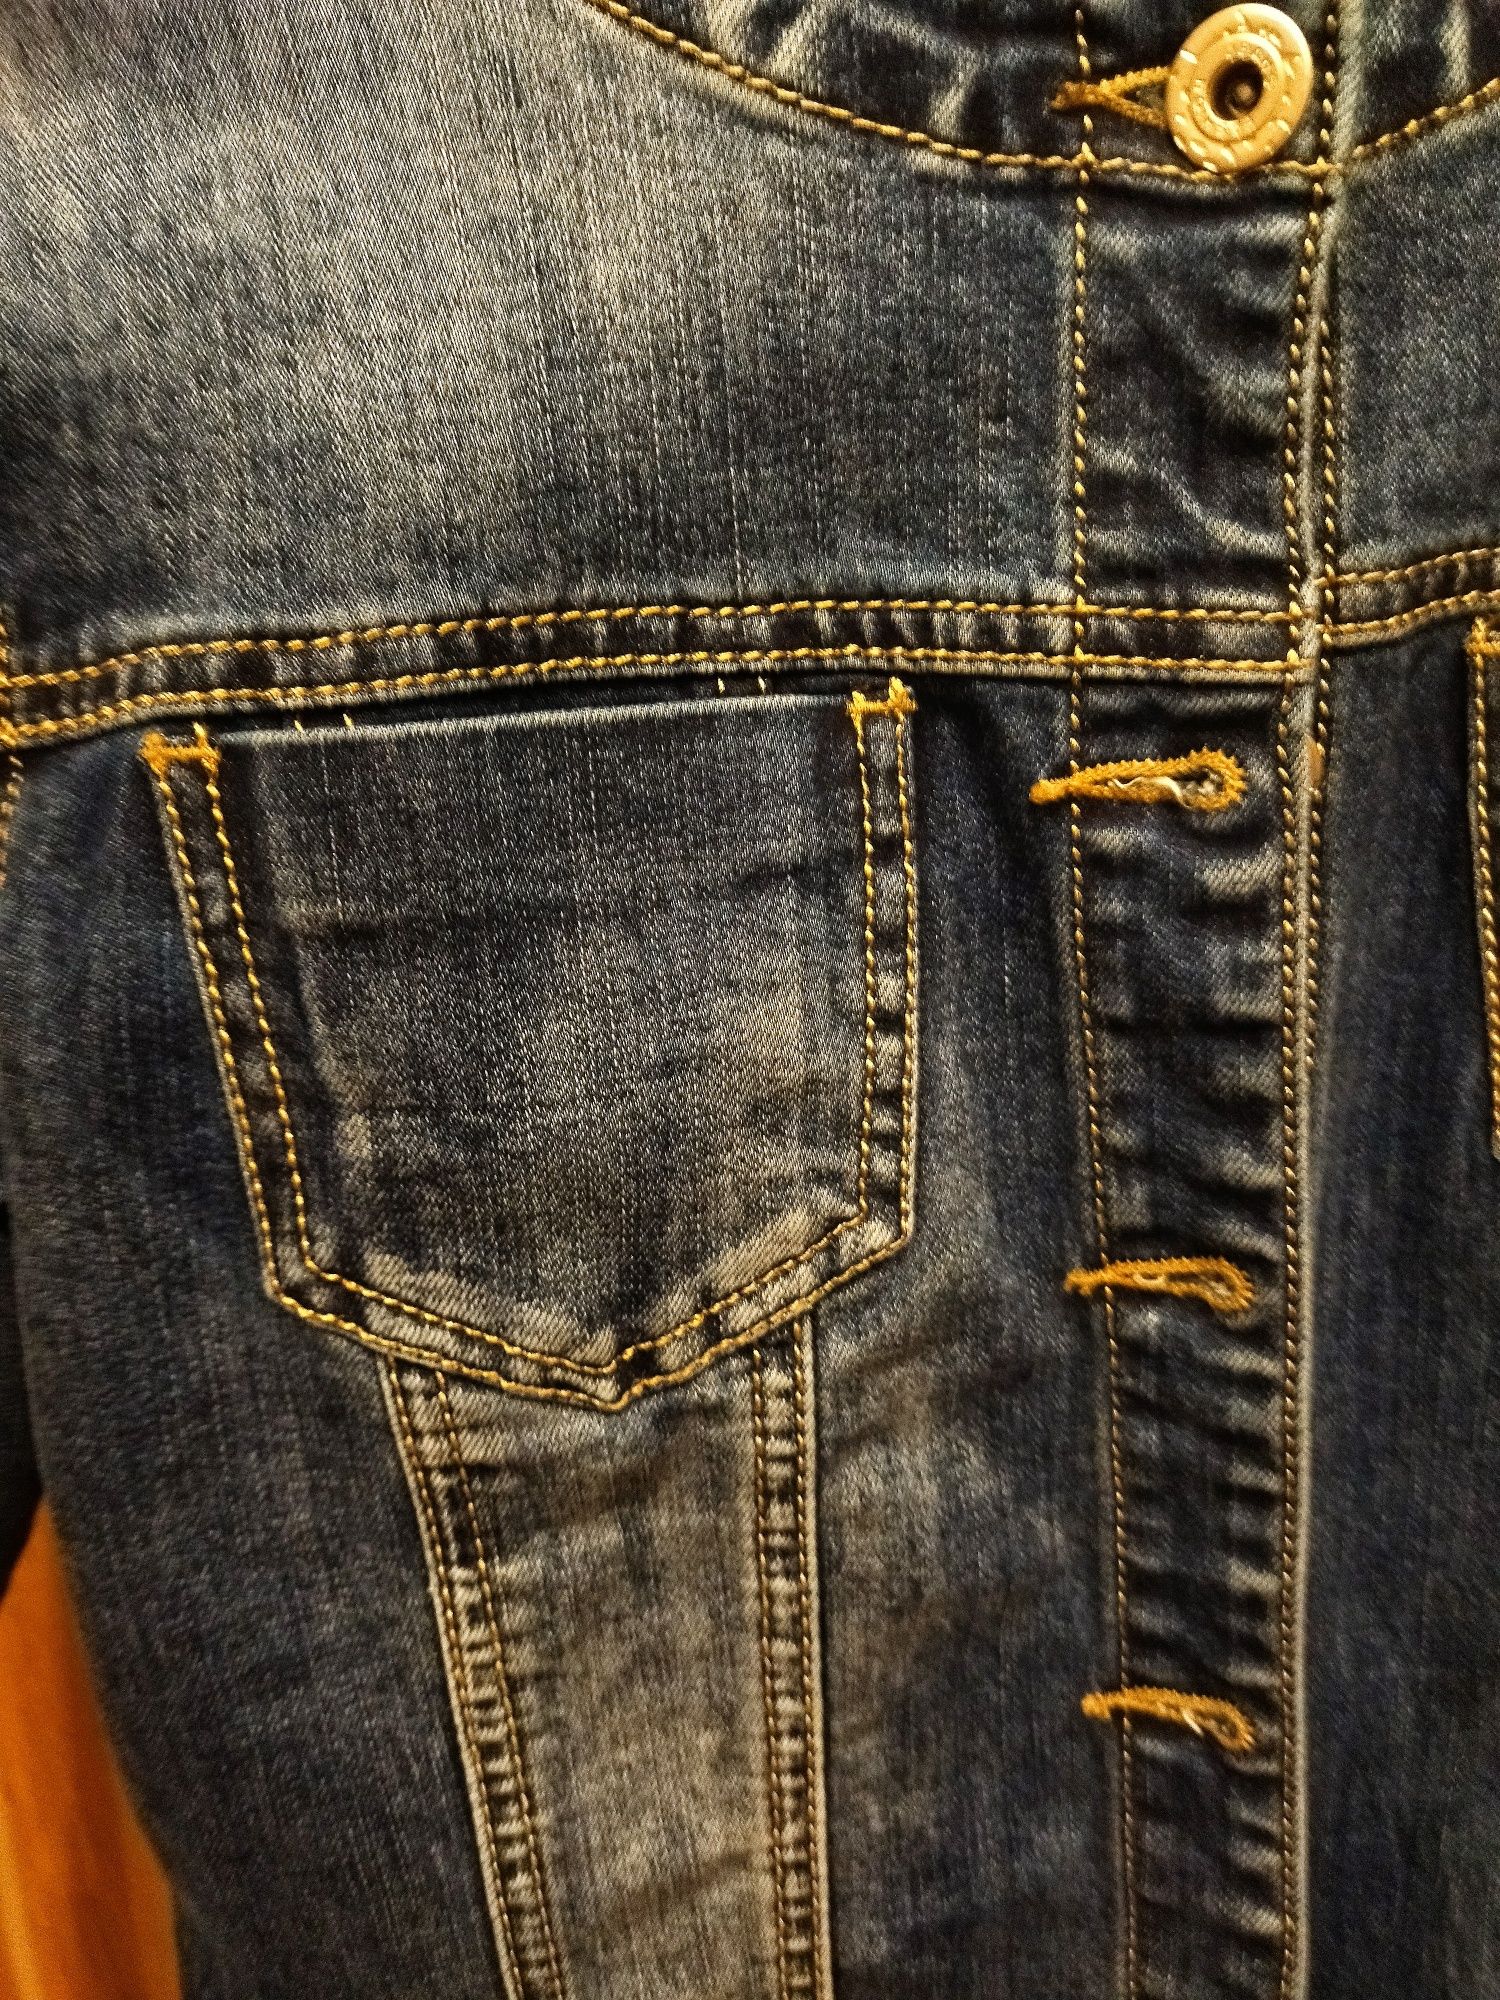 Kurtka katana jeansowa, granatowa rozmiar S nowa